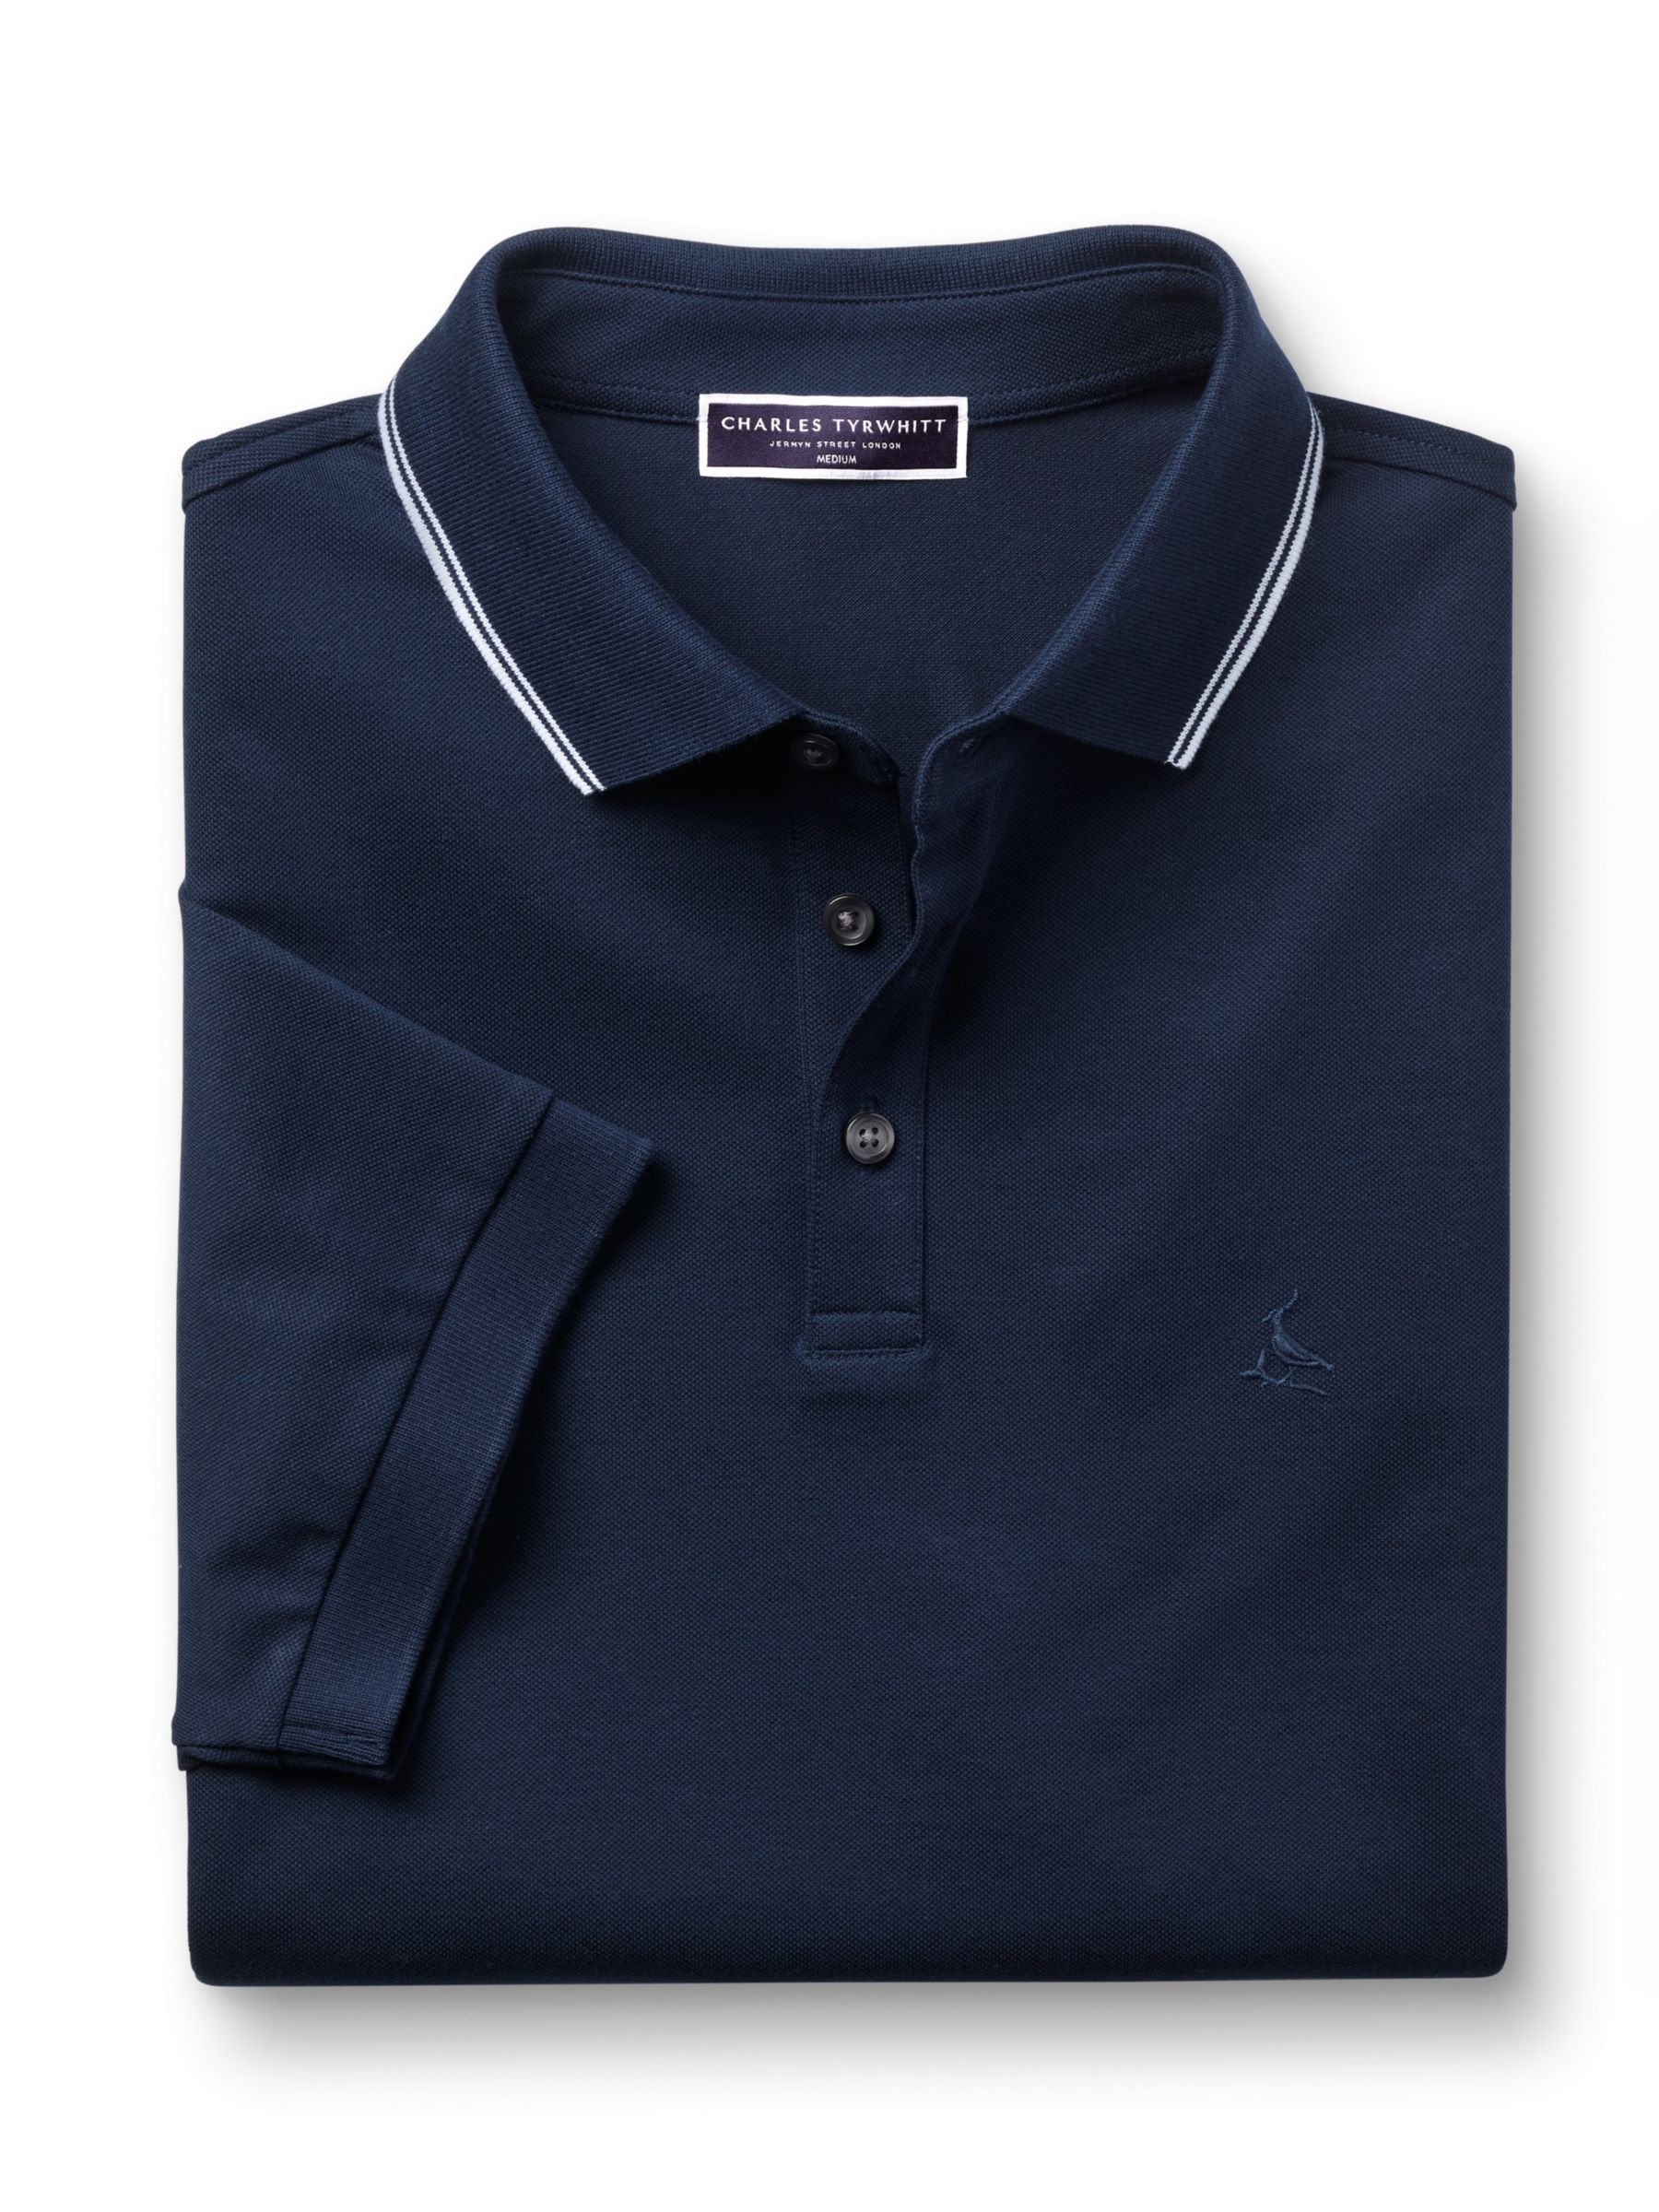 Charles Tyrwhitt Contrast Tipping Short Sleeve Polo Shirt, Navy, M